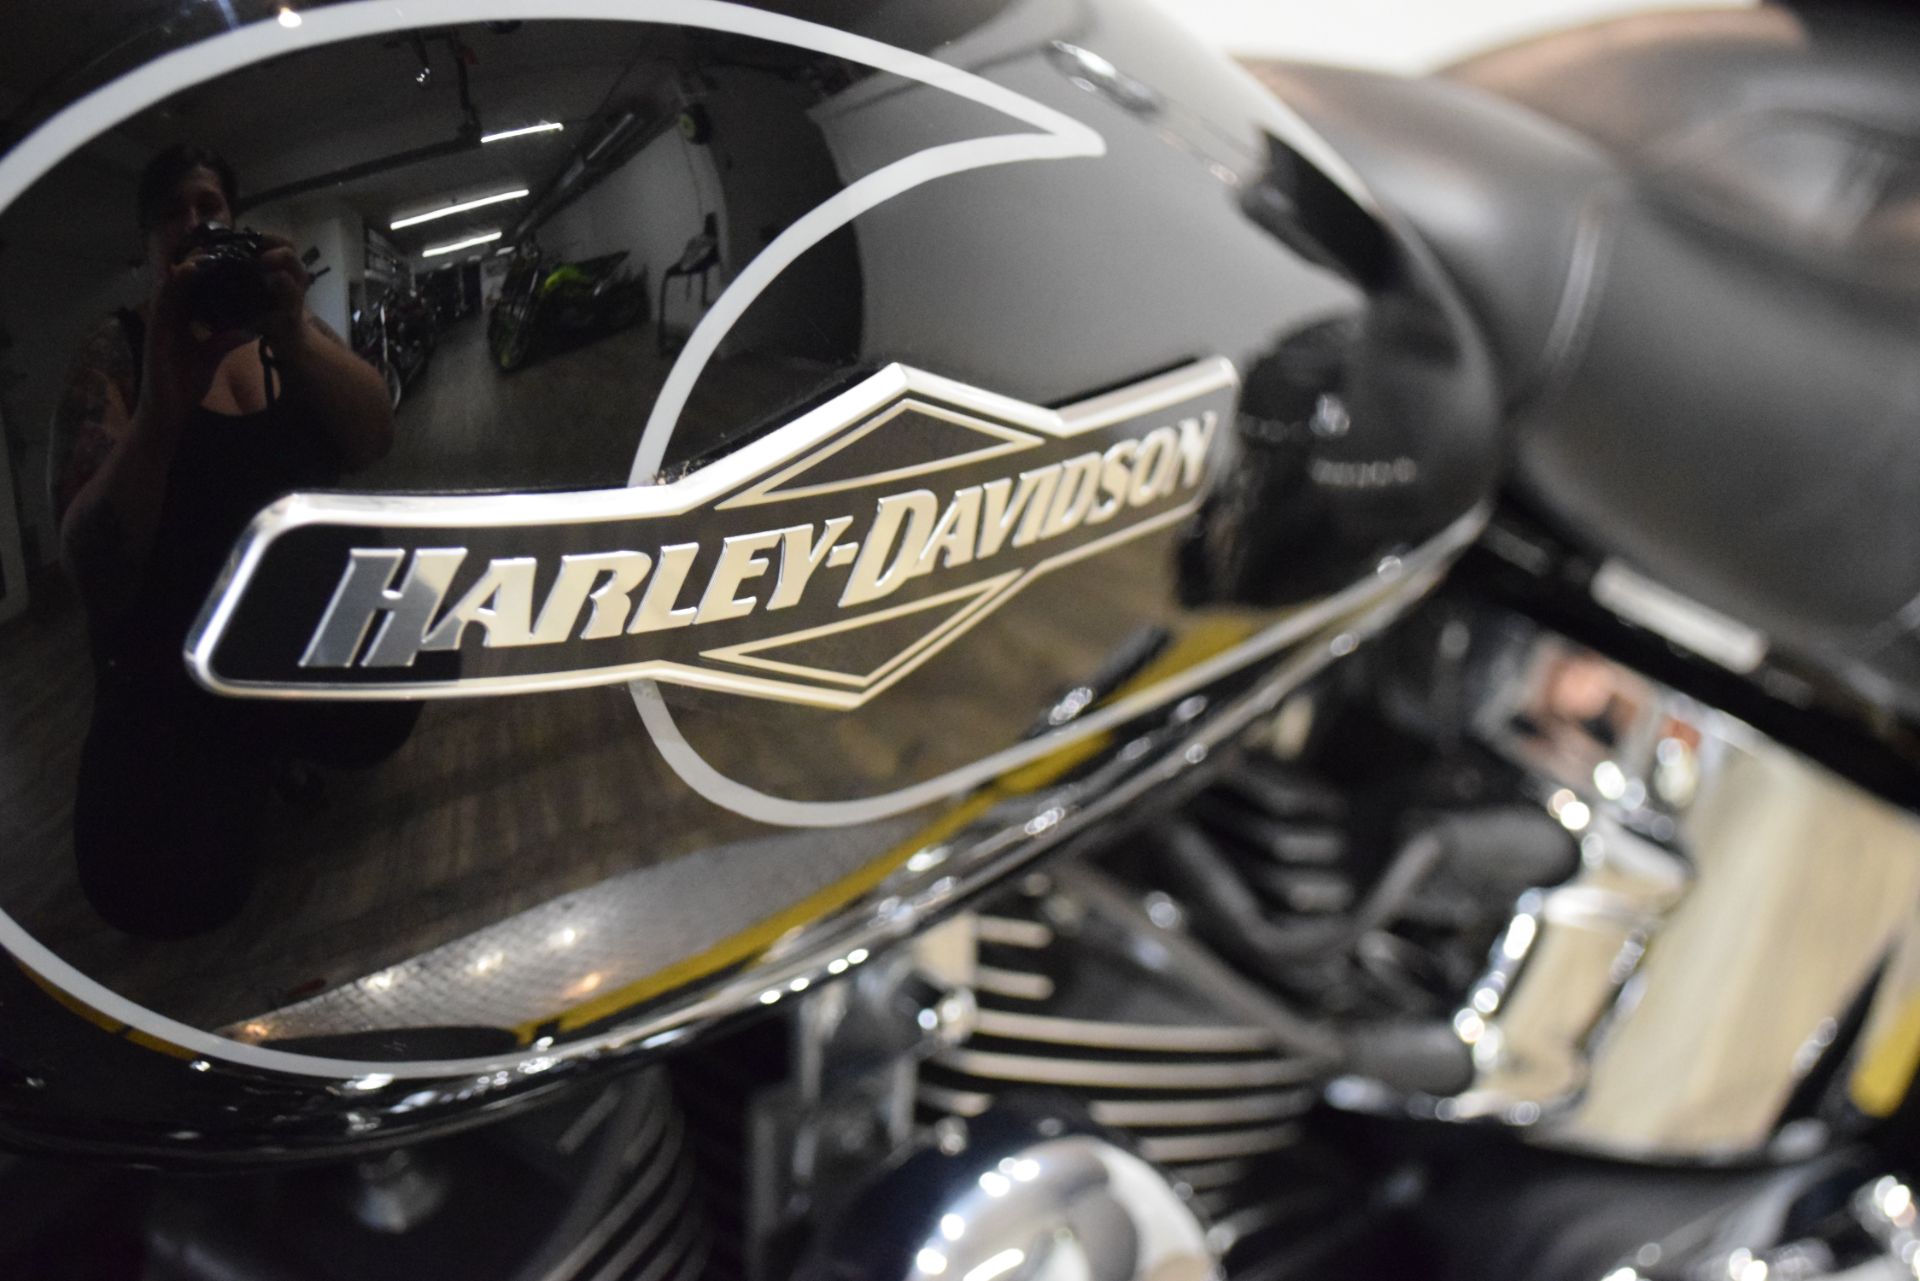 2010 Harley-Davidson Heritage Softail® Classic in Wauconda, Illinois - Photo 20